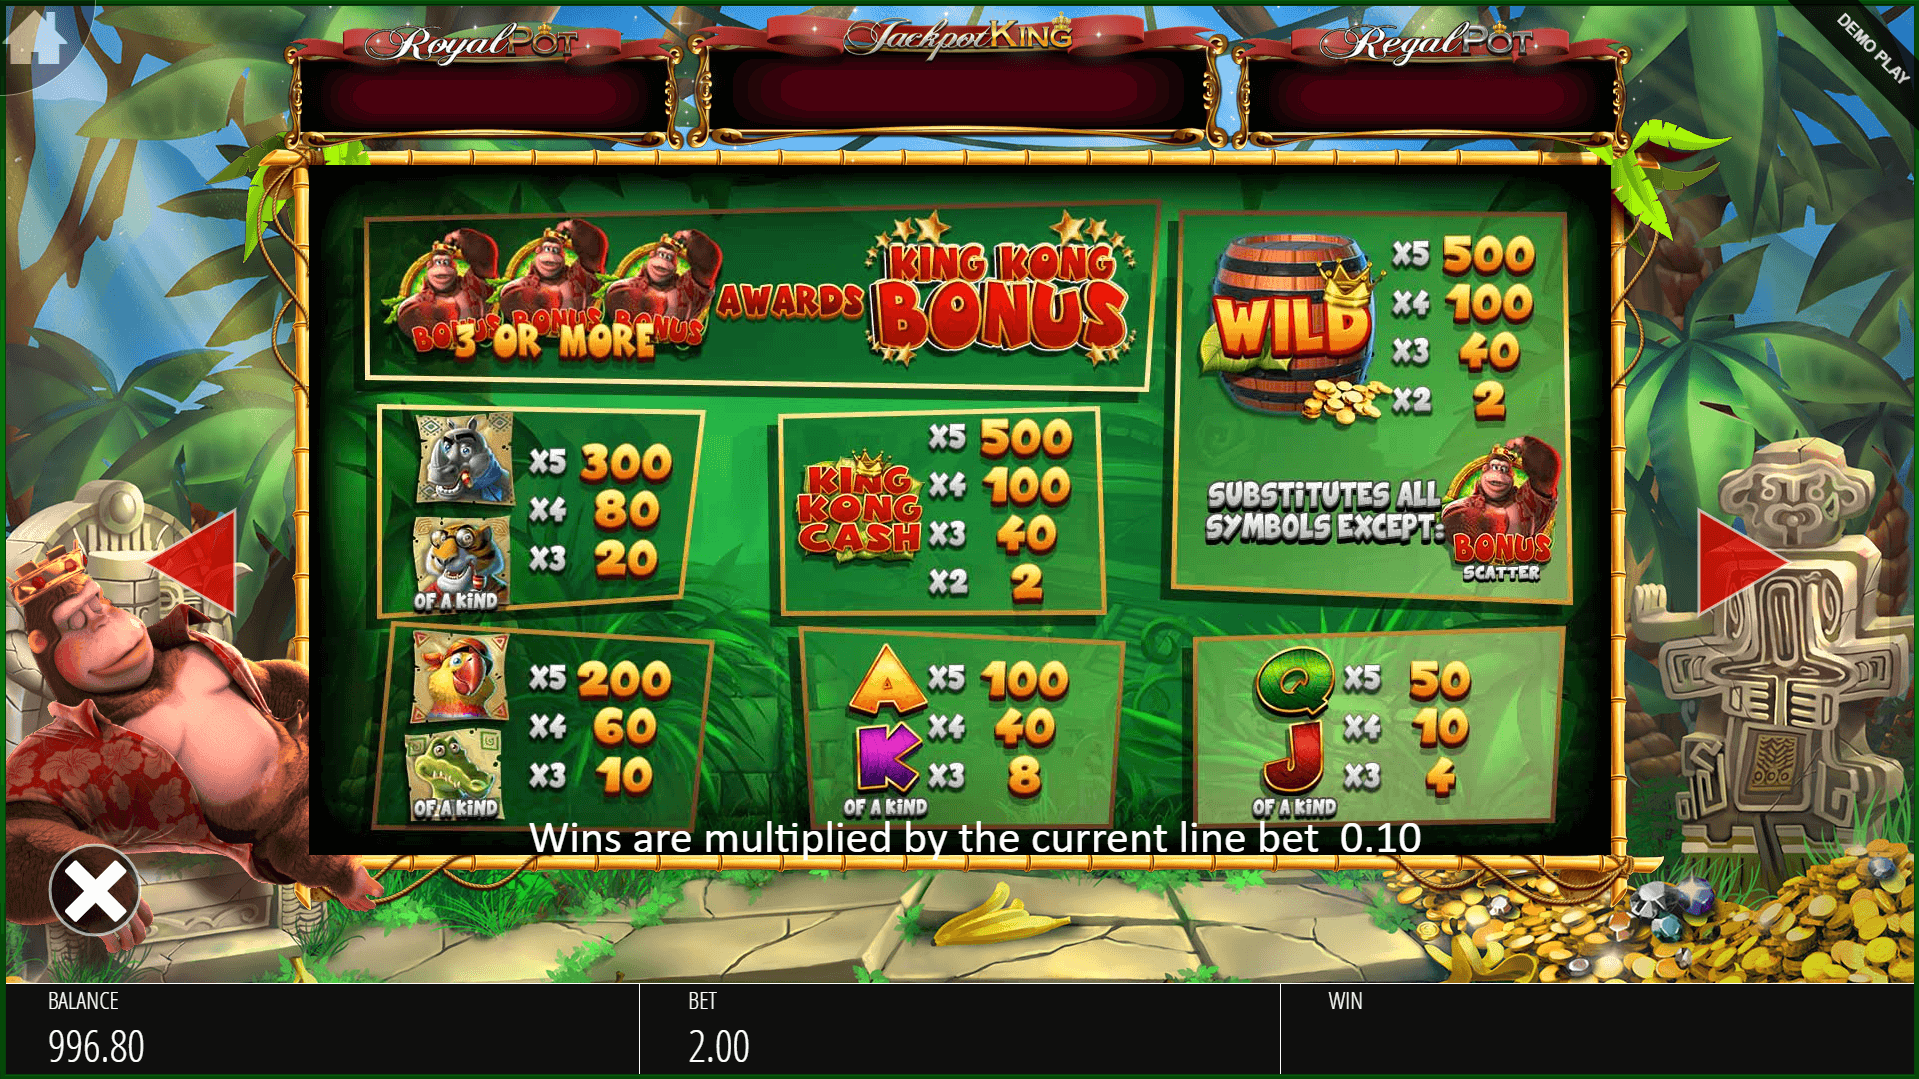 King Kong Cash Jackpot King Slot Machine